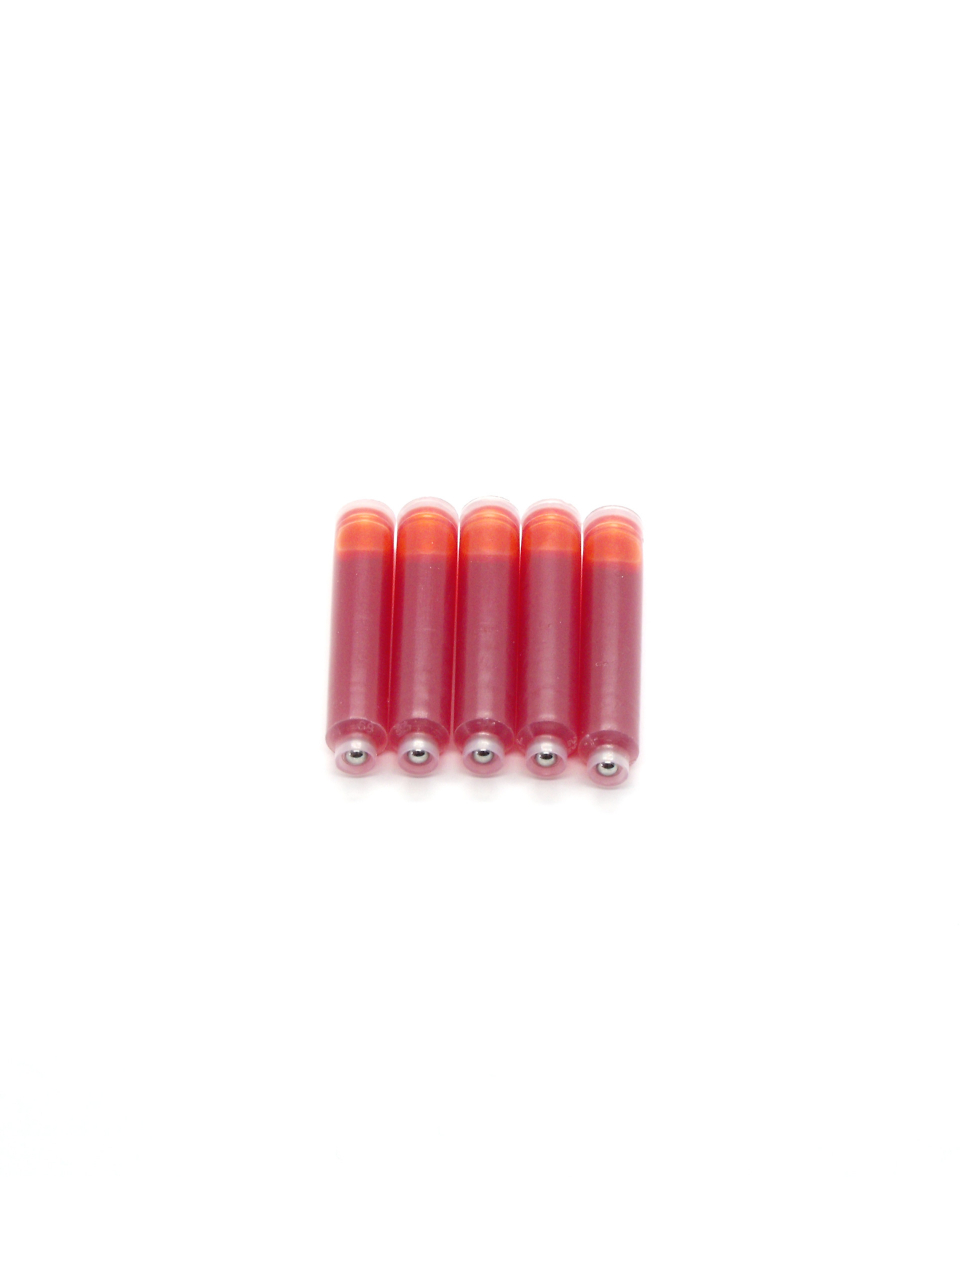 Top Ink Cartridges For Nemosine Fountain Pens (Orange)